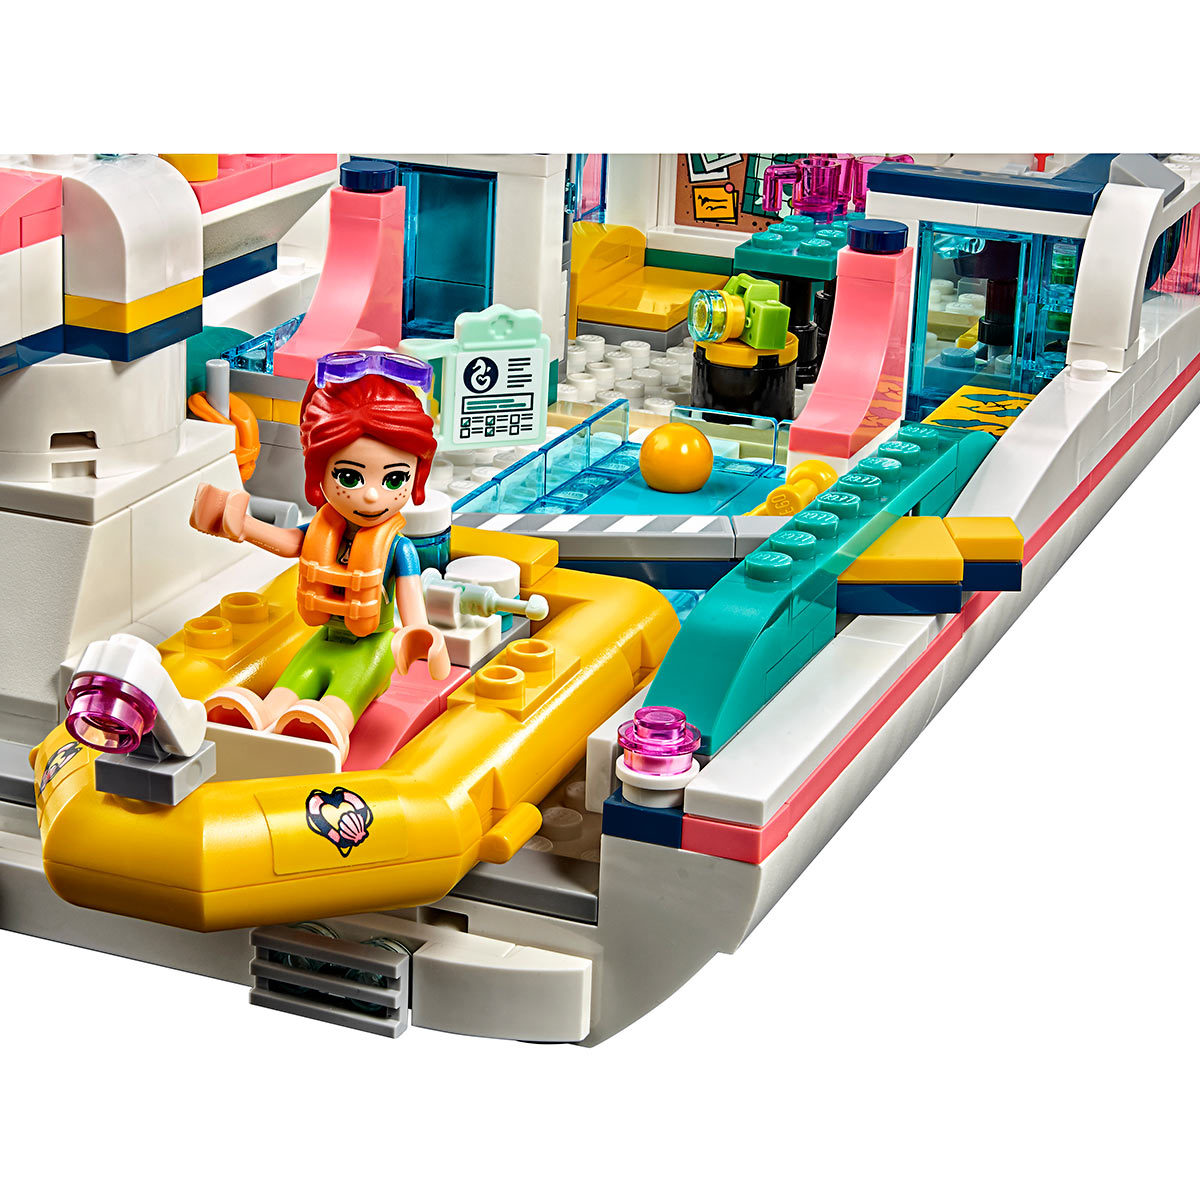 Lego Mission Boat key piece - Lego Life boat